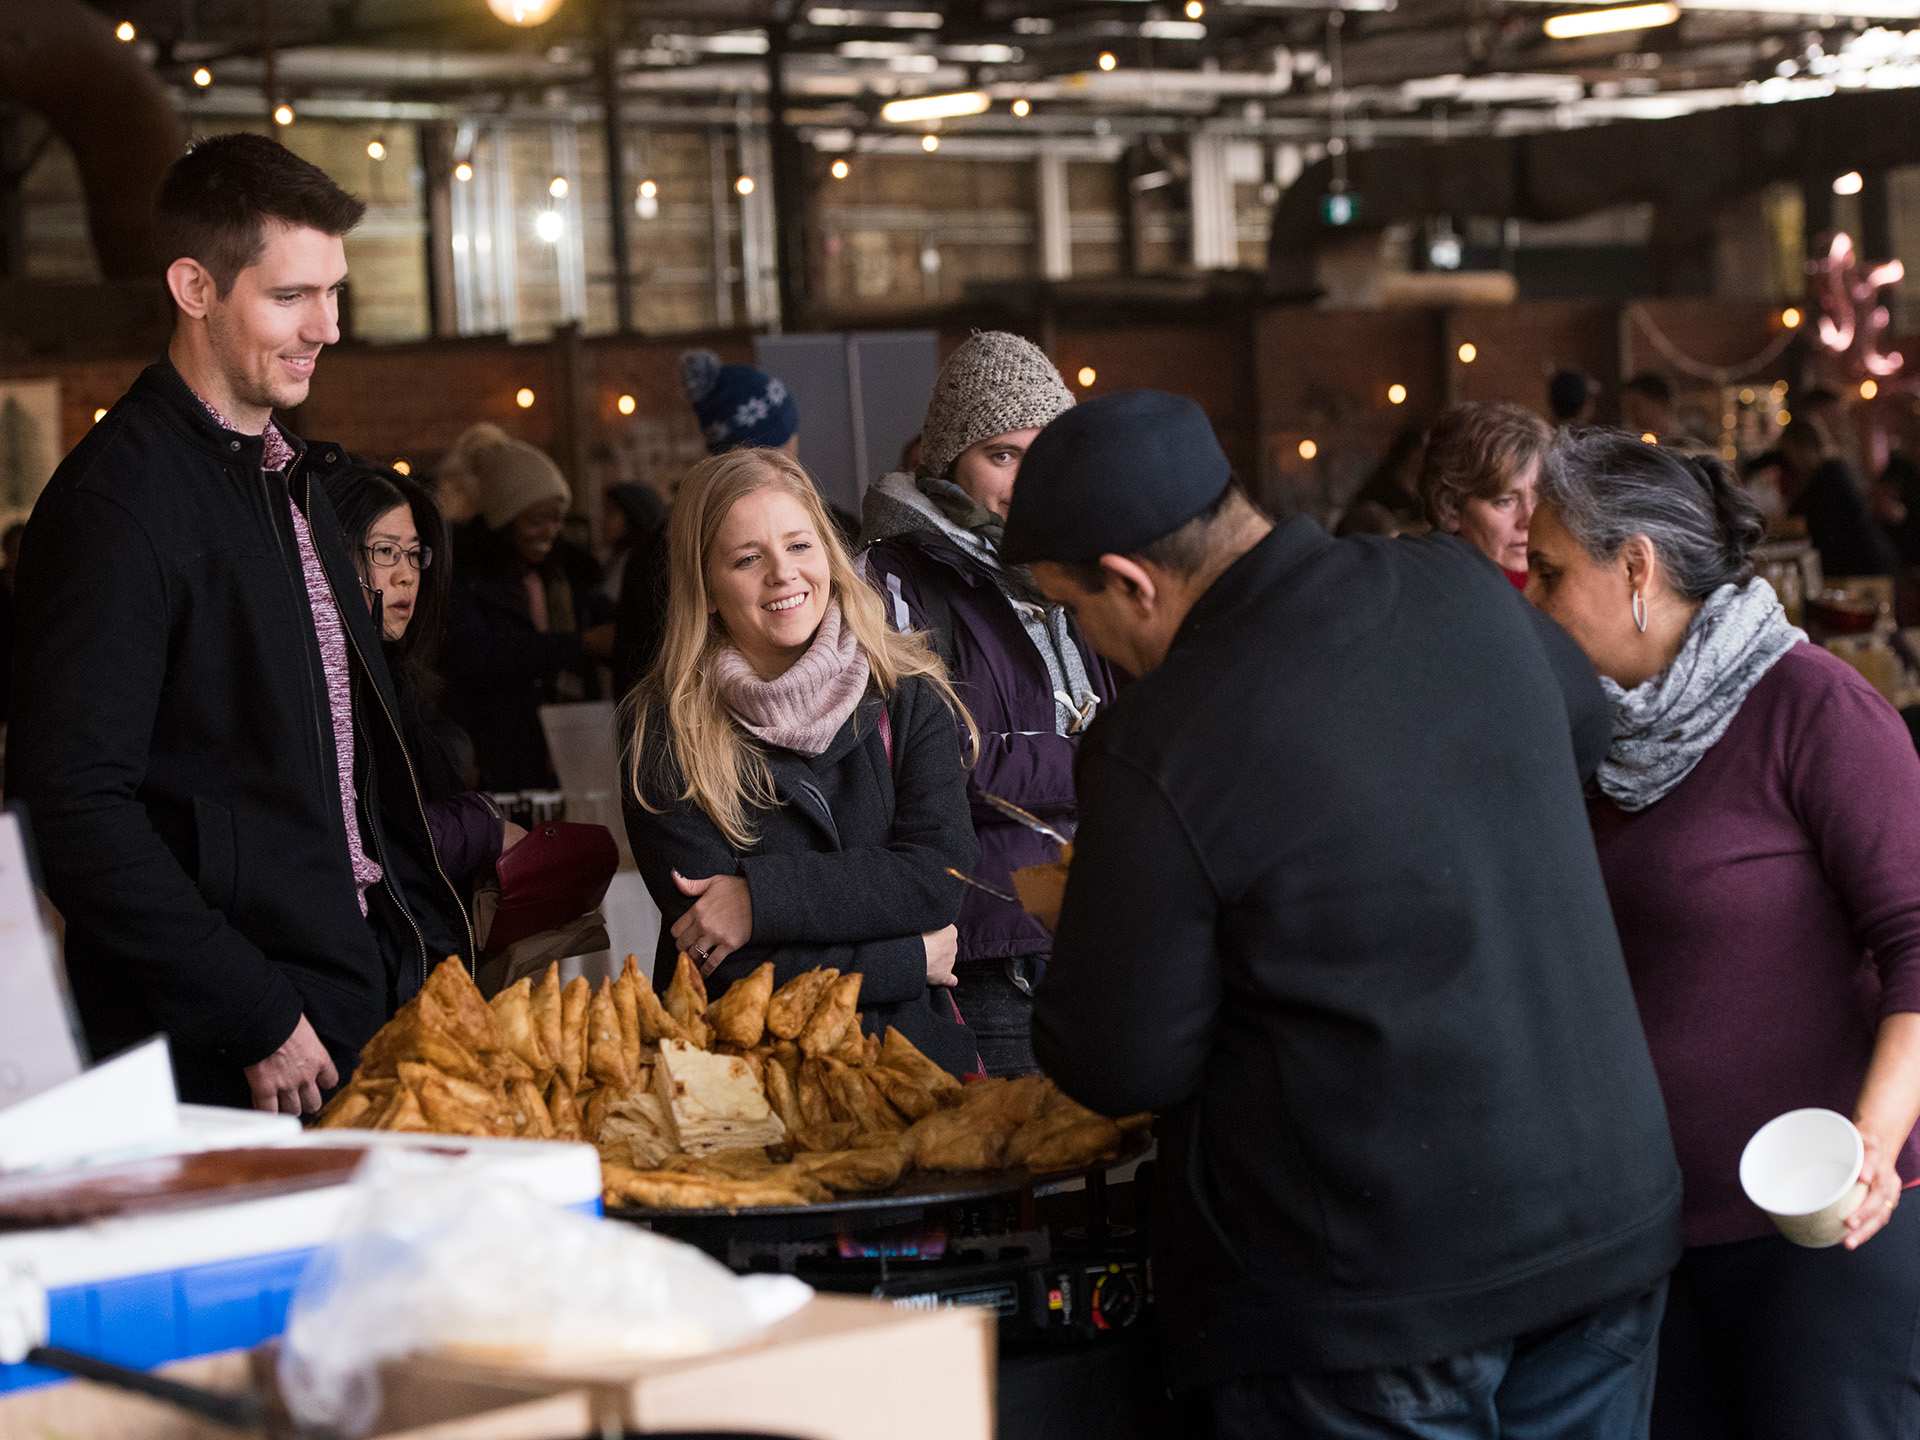 Toronto Christmas markets | Food vendors at Evergreen Brickworks Winter Village